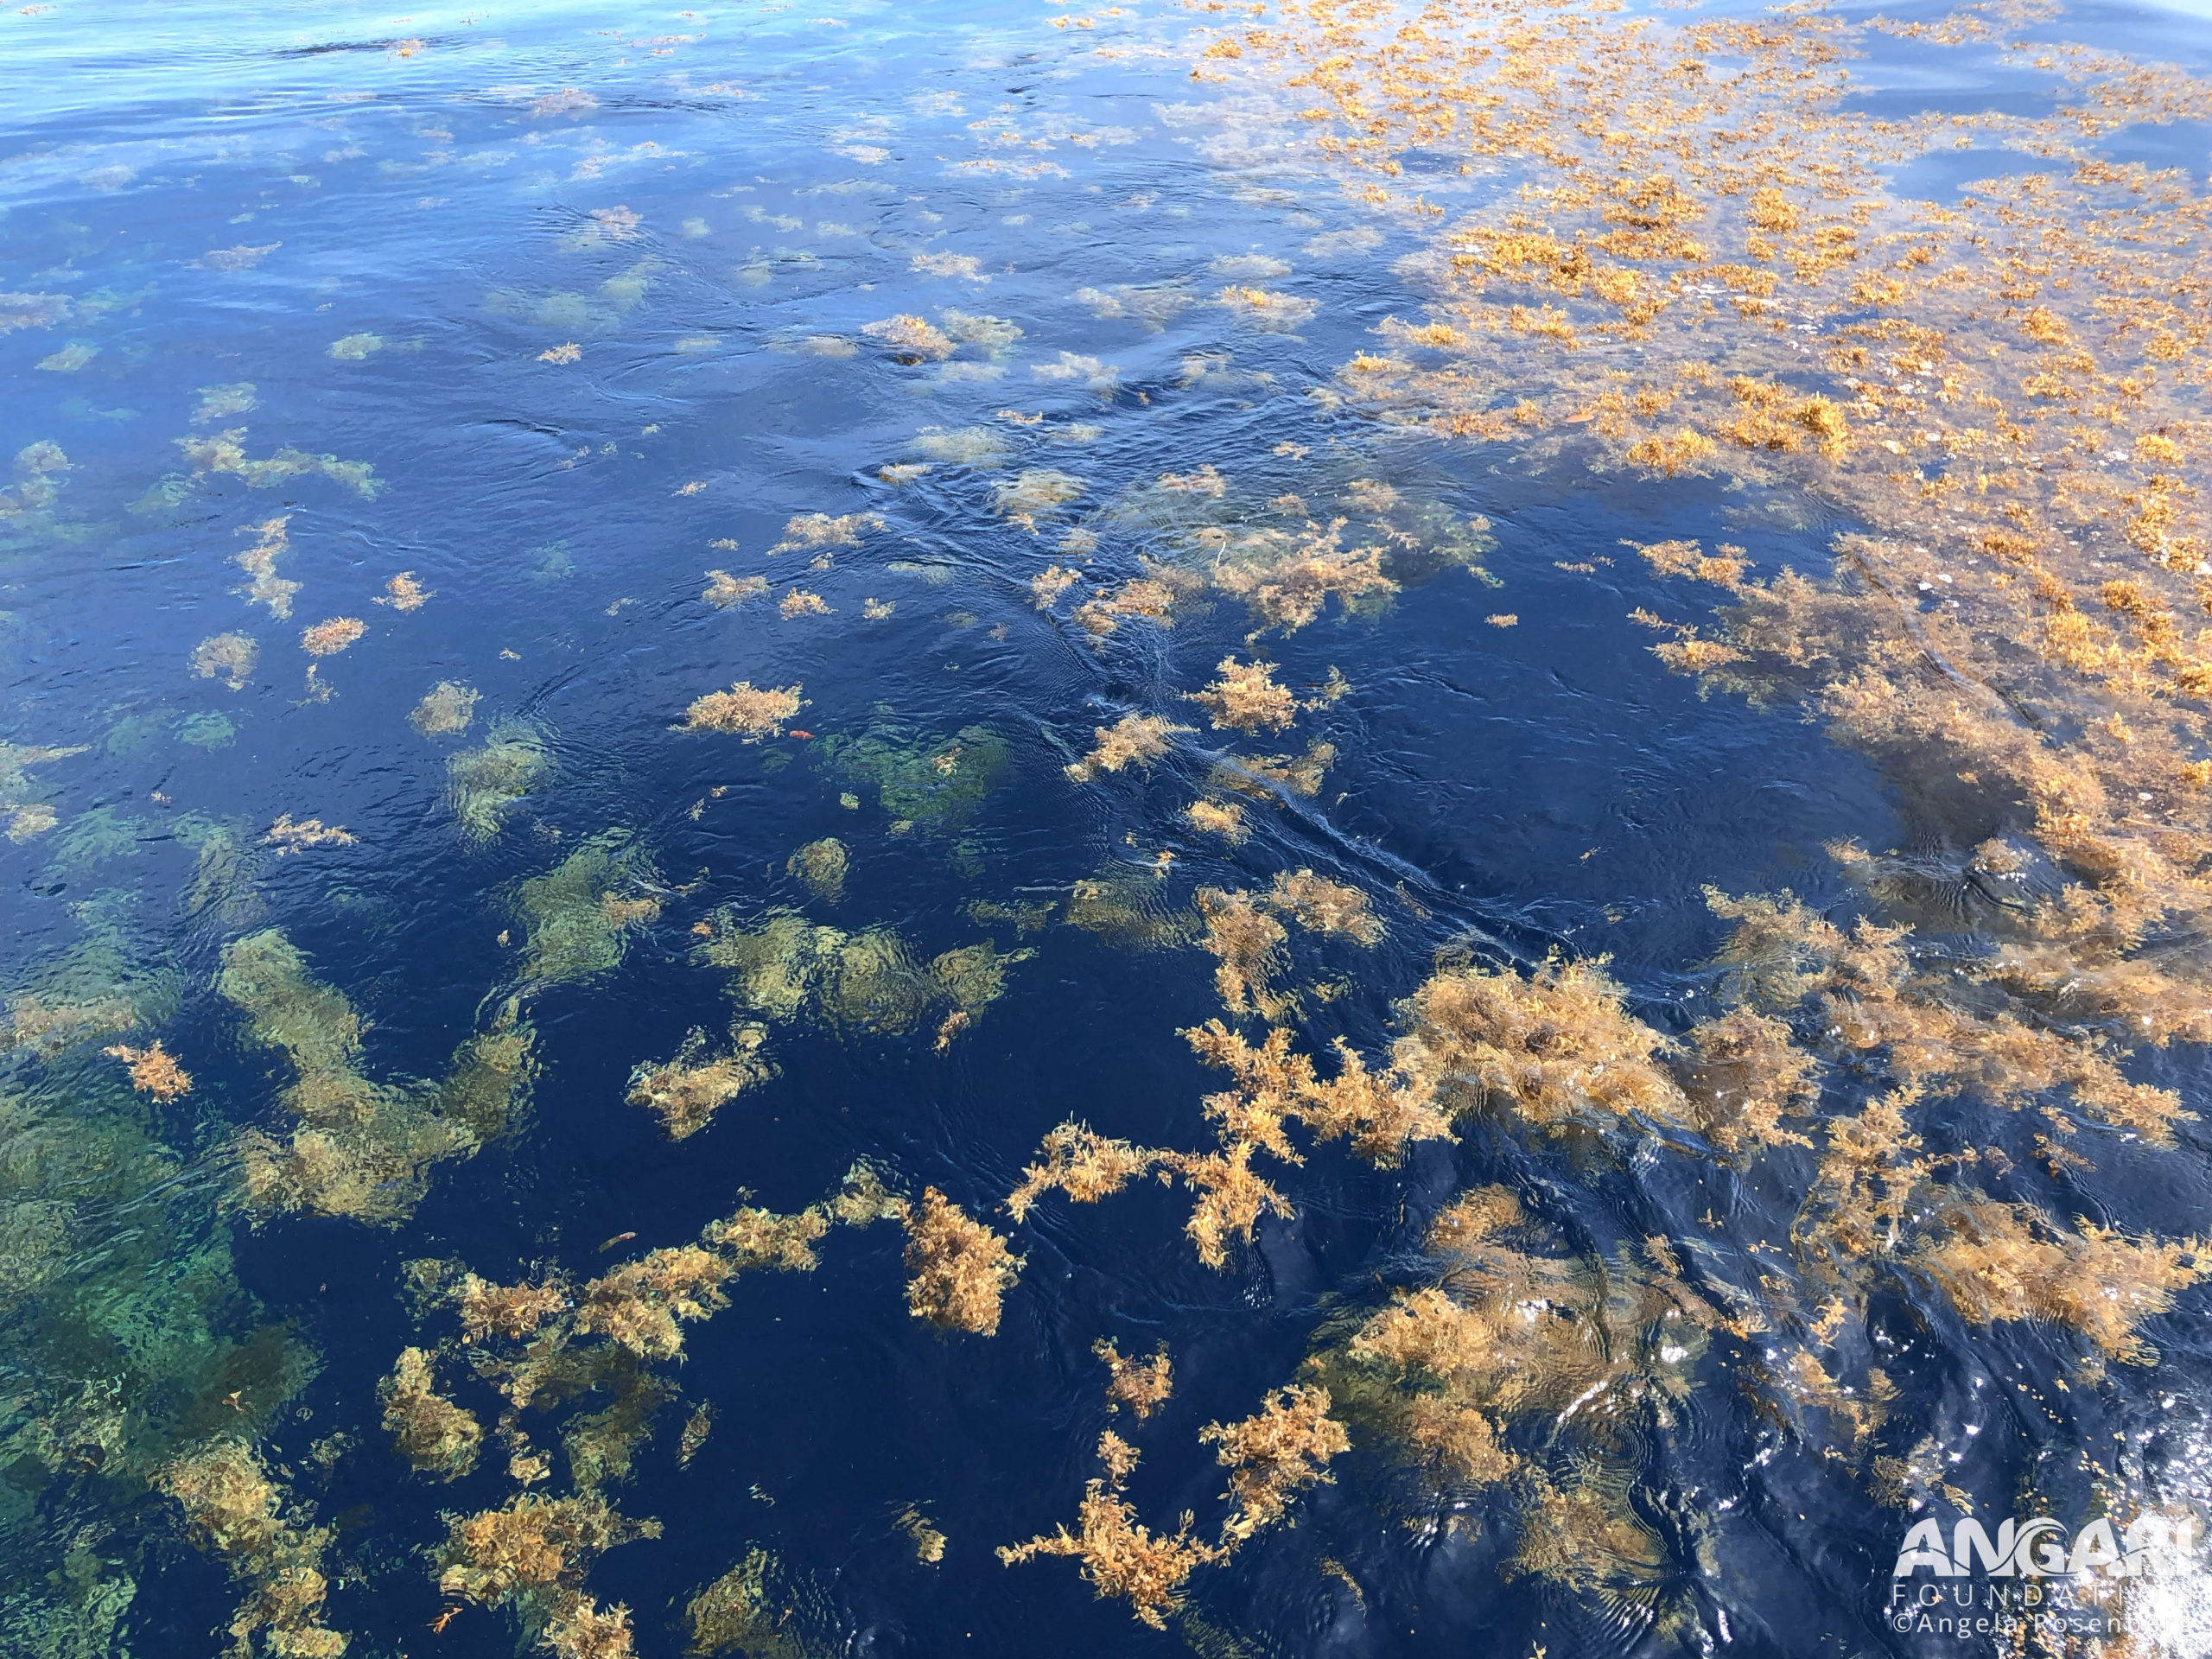 #ANGARIDeepDive - Sargassum floating in the ocean.